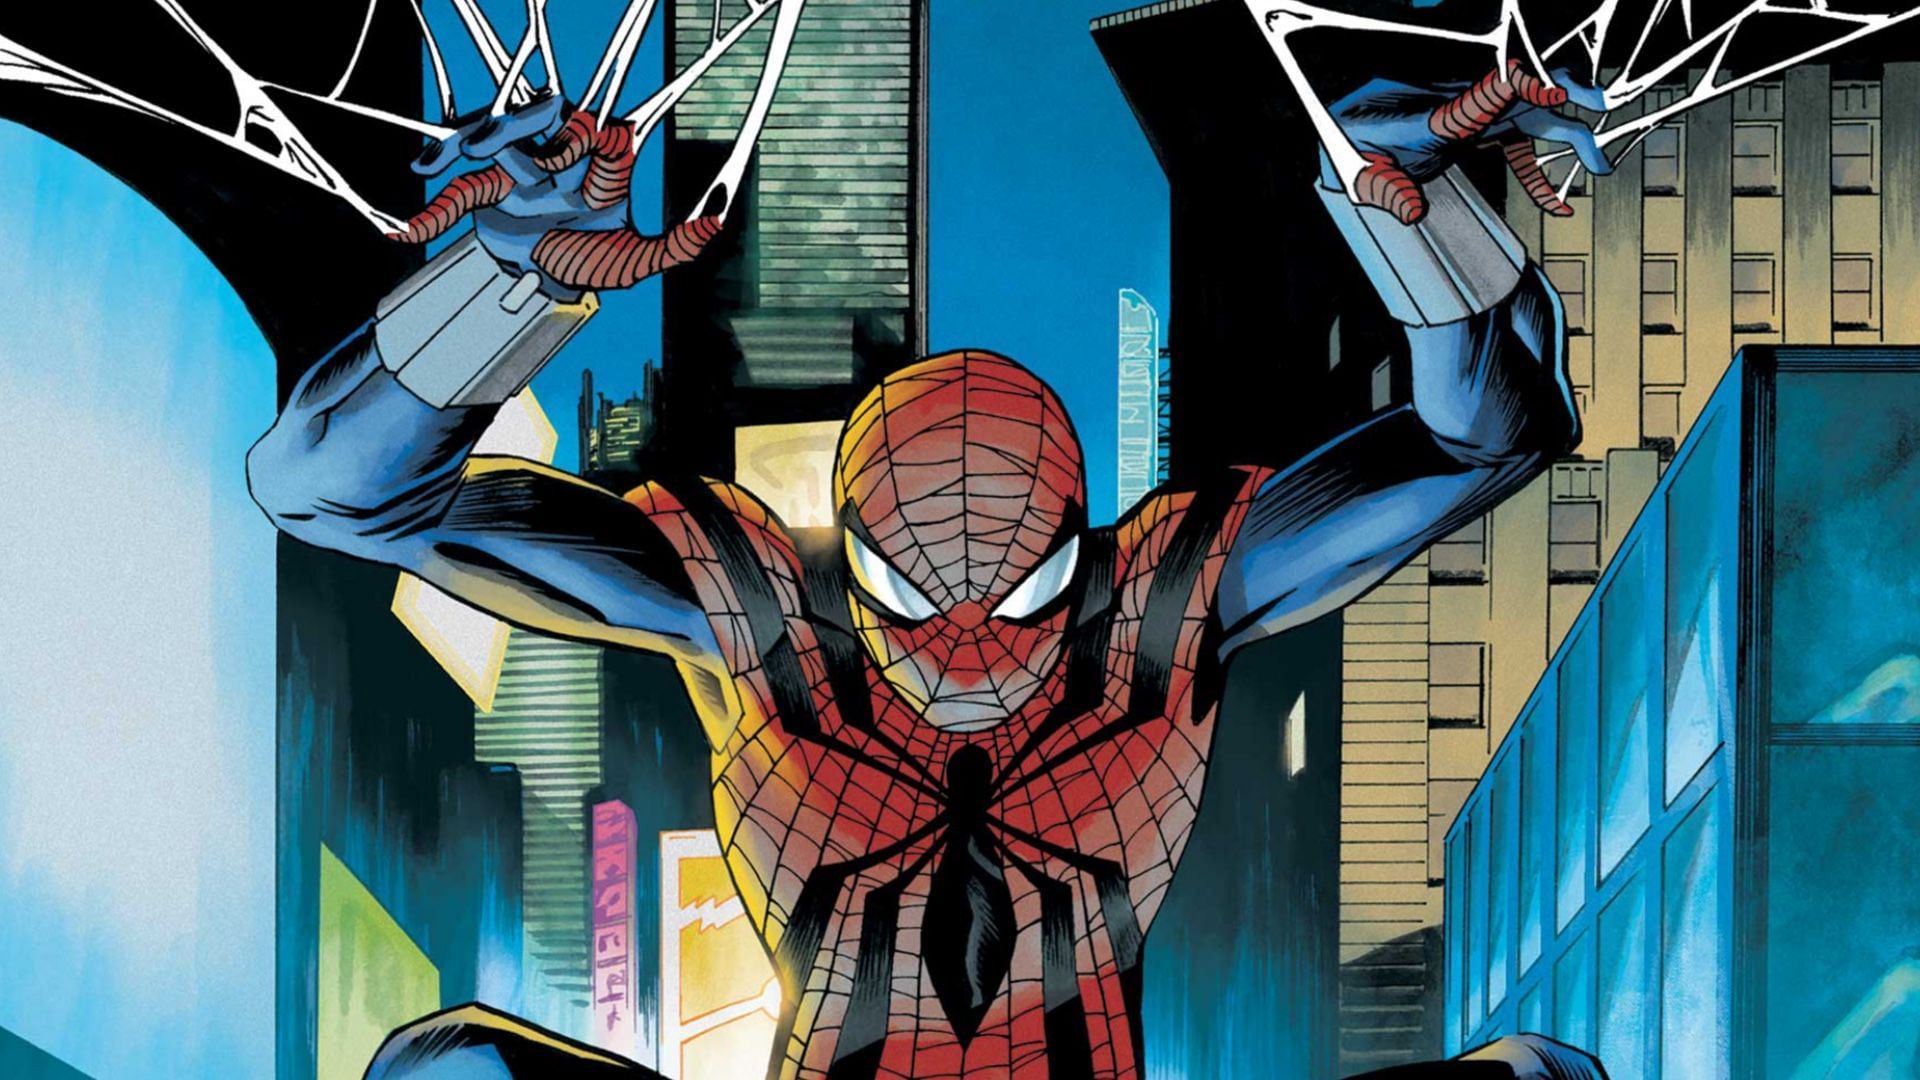 Spider-Man facing off against multiple clones of himself (Image via Marvel Comics)